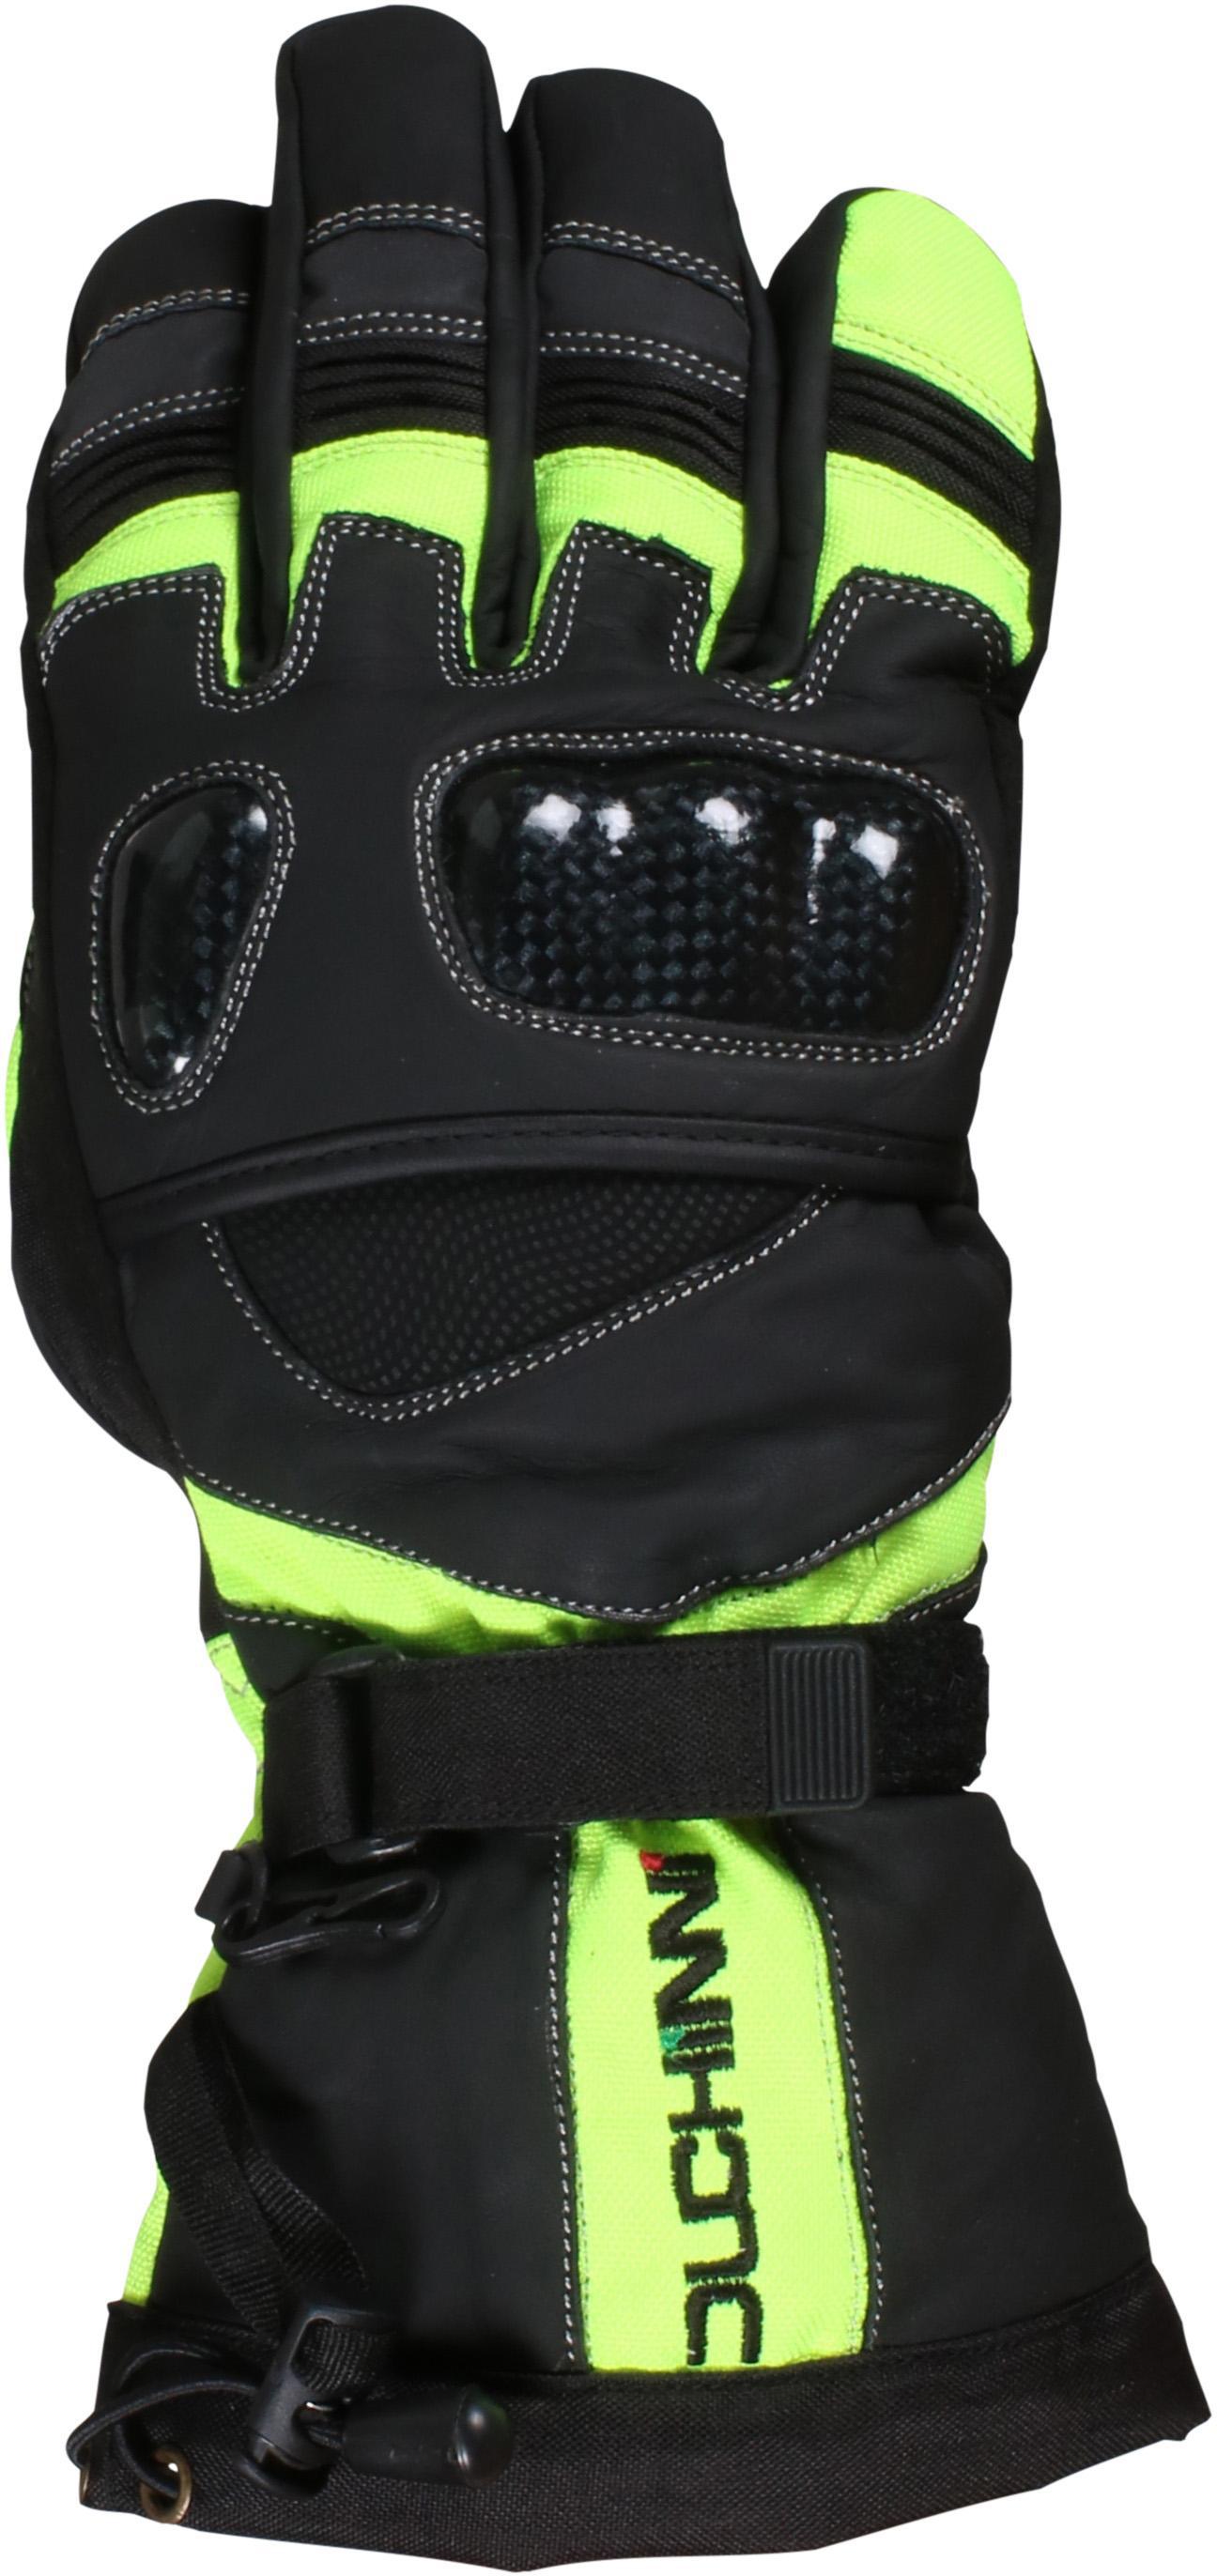 Duchinni Yukon Motorcycle Gloves - Black And Neon, Xl